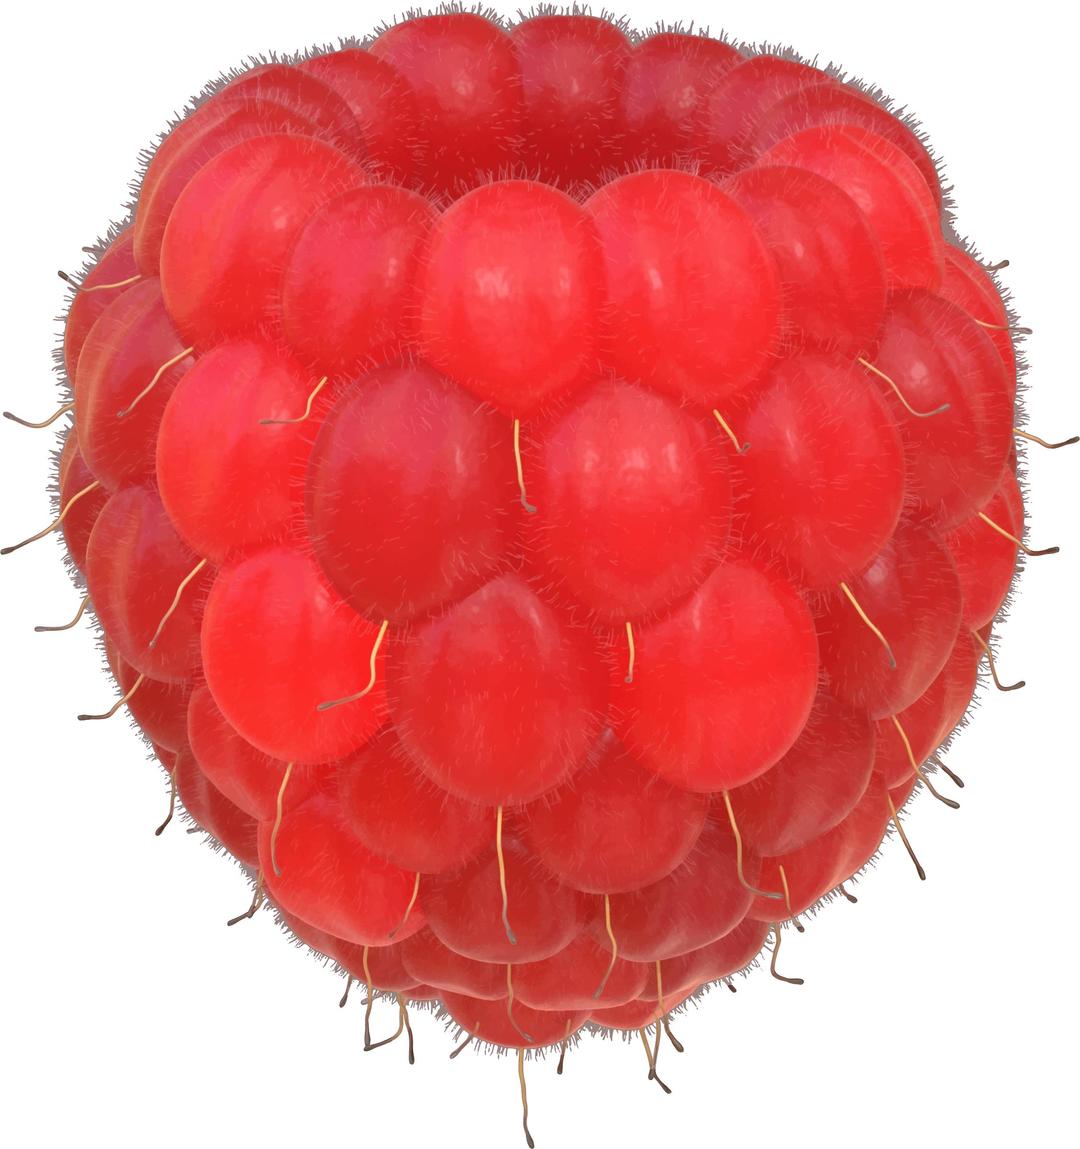 Raspberry png transparent